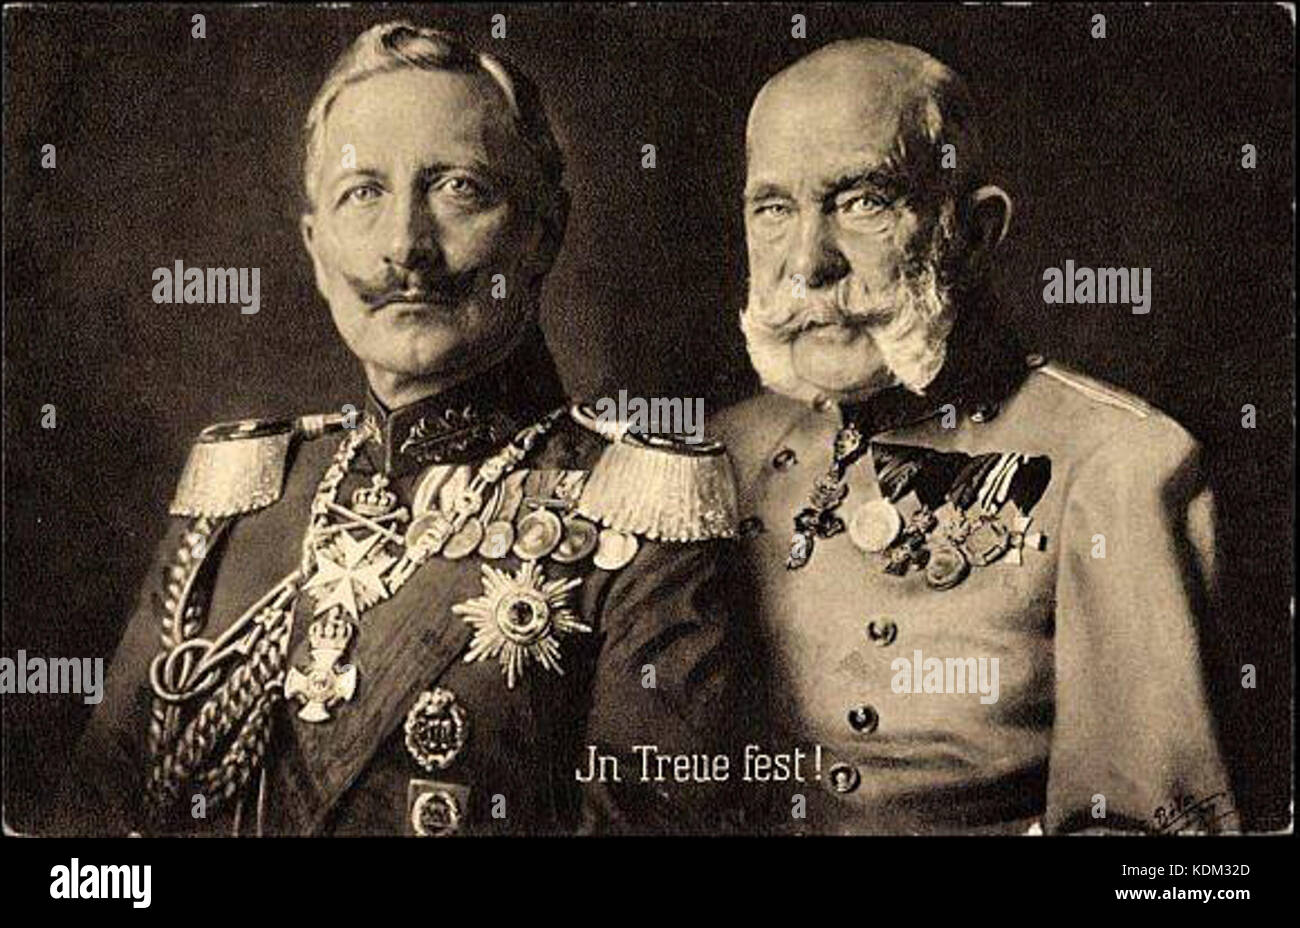 Kaiser Wilhelm II Germany Kaiser Franz Joseph I Austria circa 1905 In Treue fest Stock Photo